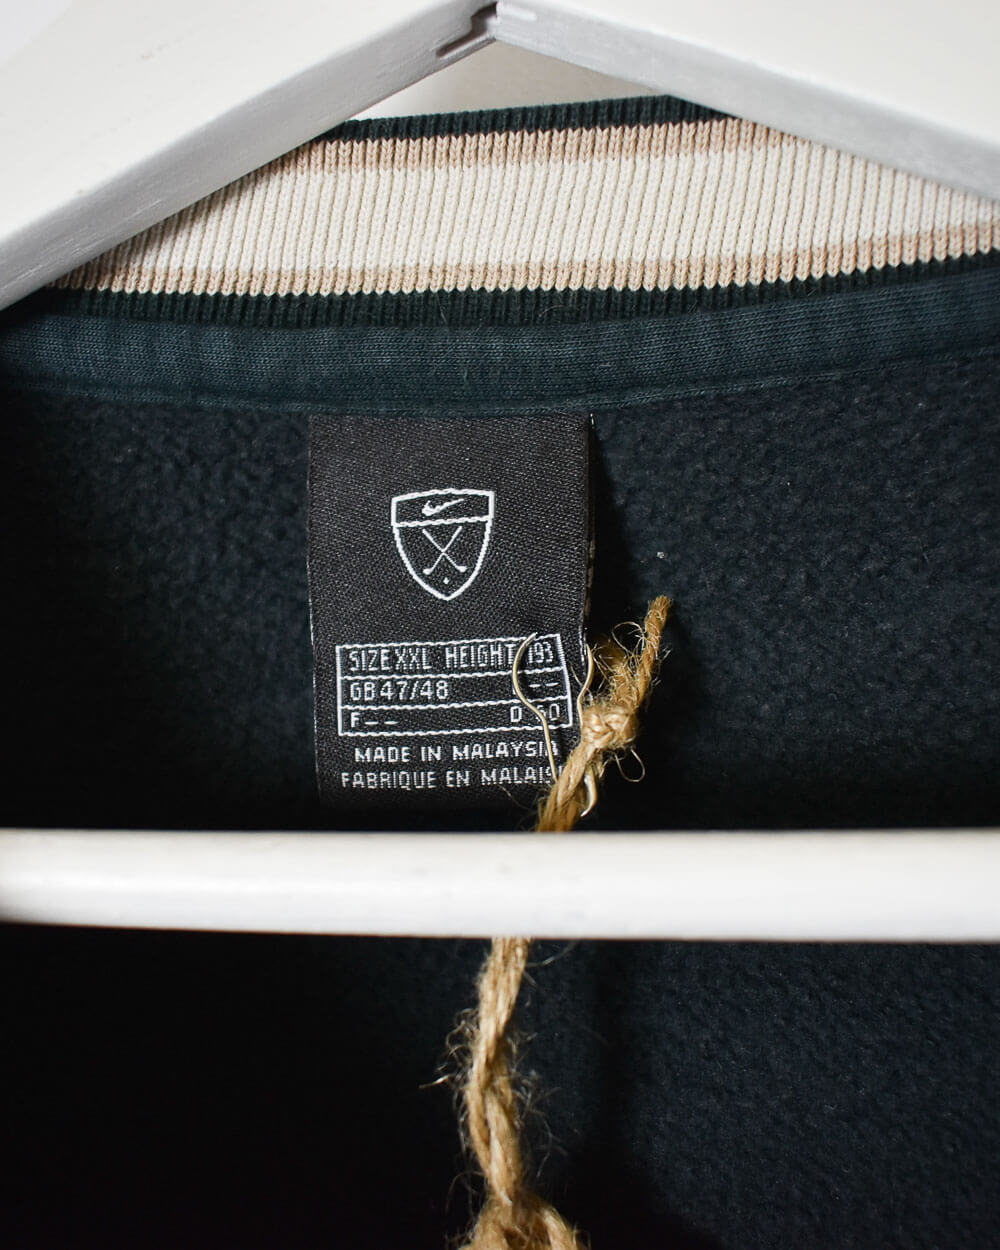 Black Nike Golf Sweatshirt - XX-Large